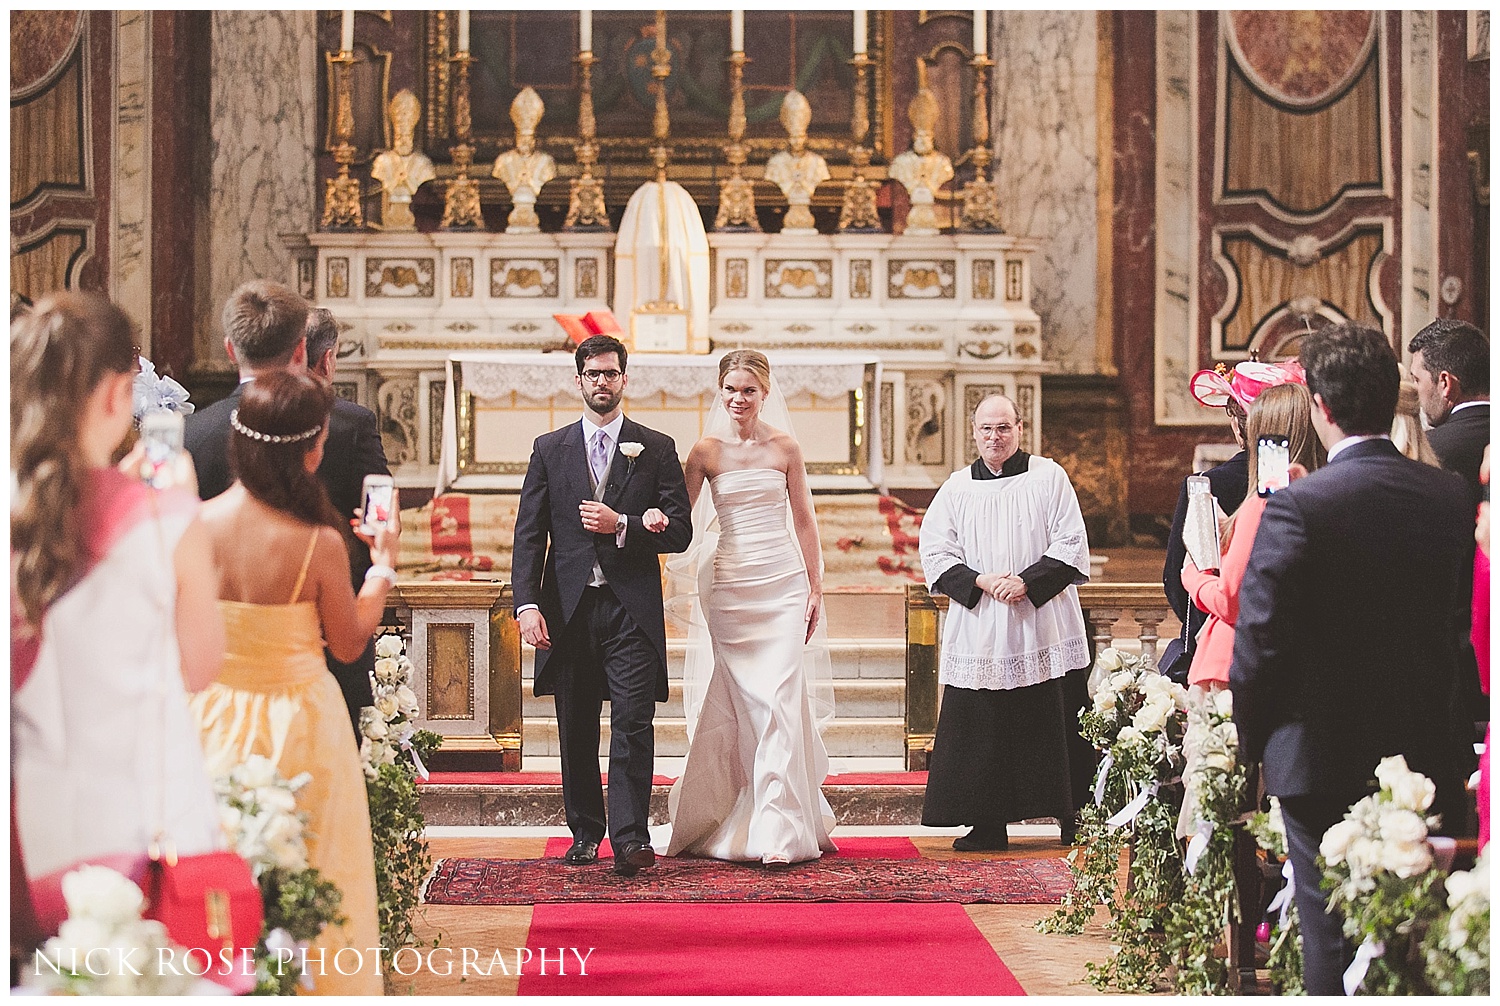 Brompton Oratory Wedding Photographer London